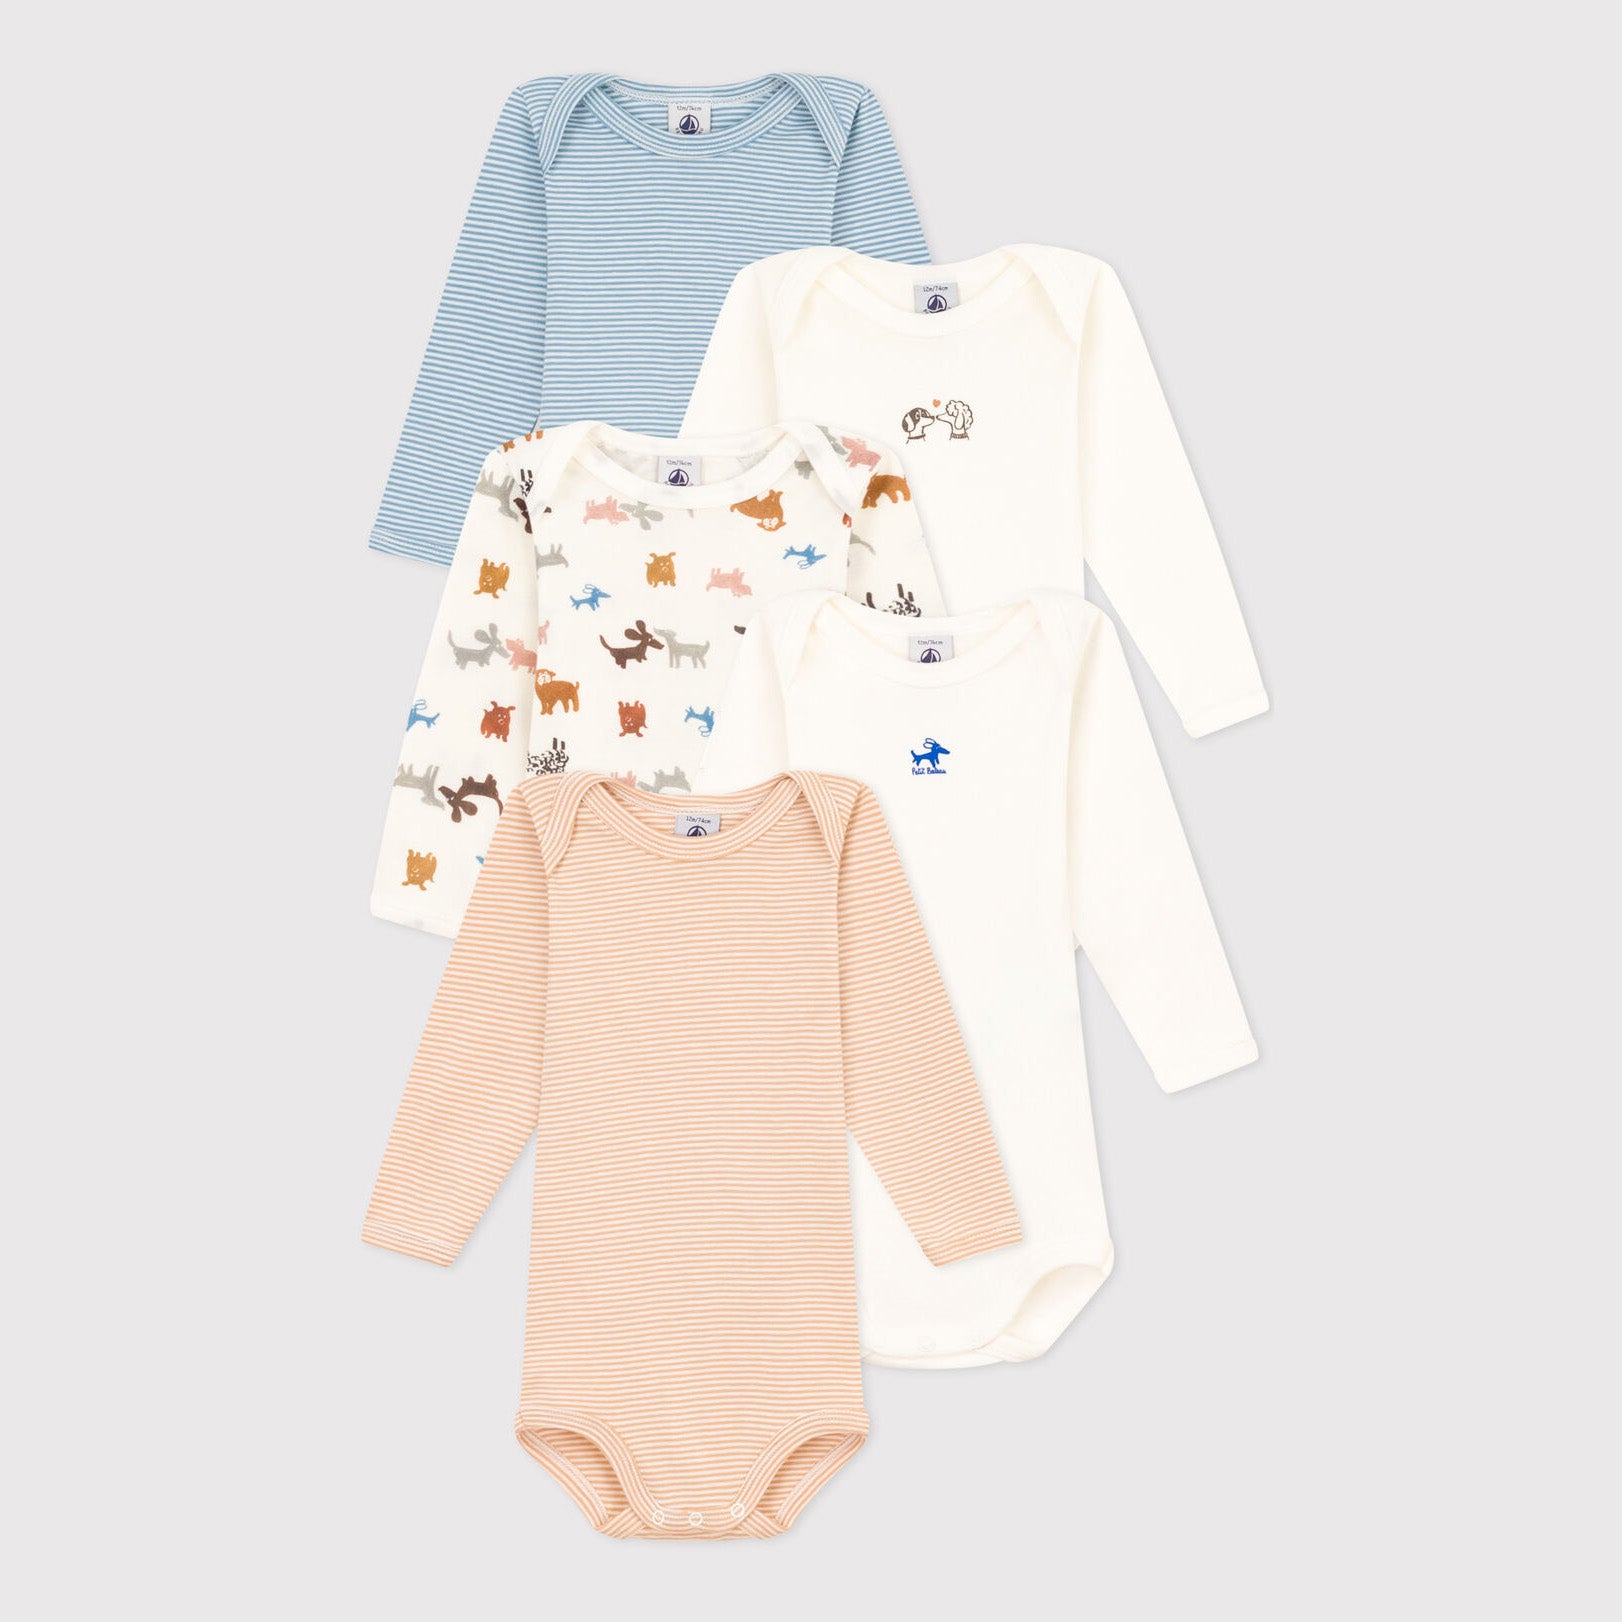 Baby Boys & Girls Multicolor Cotton Babysuit Set(5 Pack)